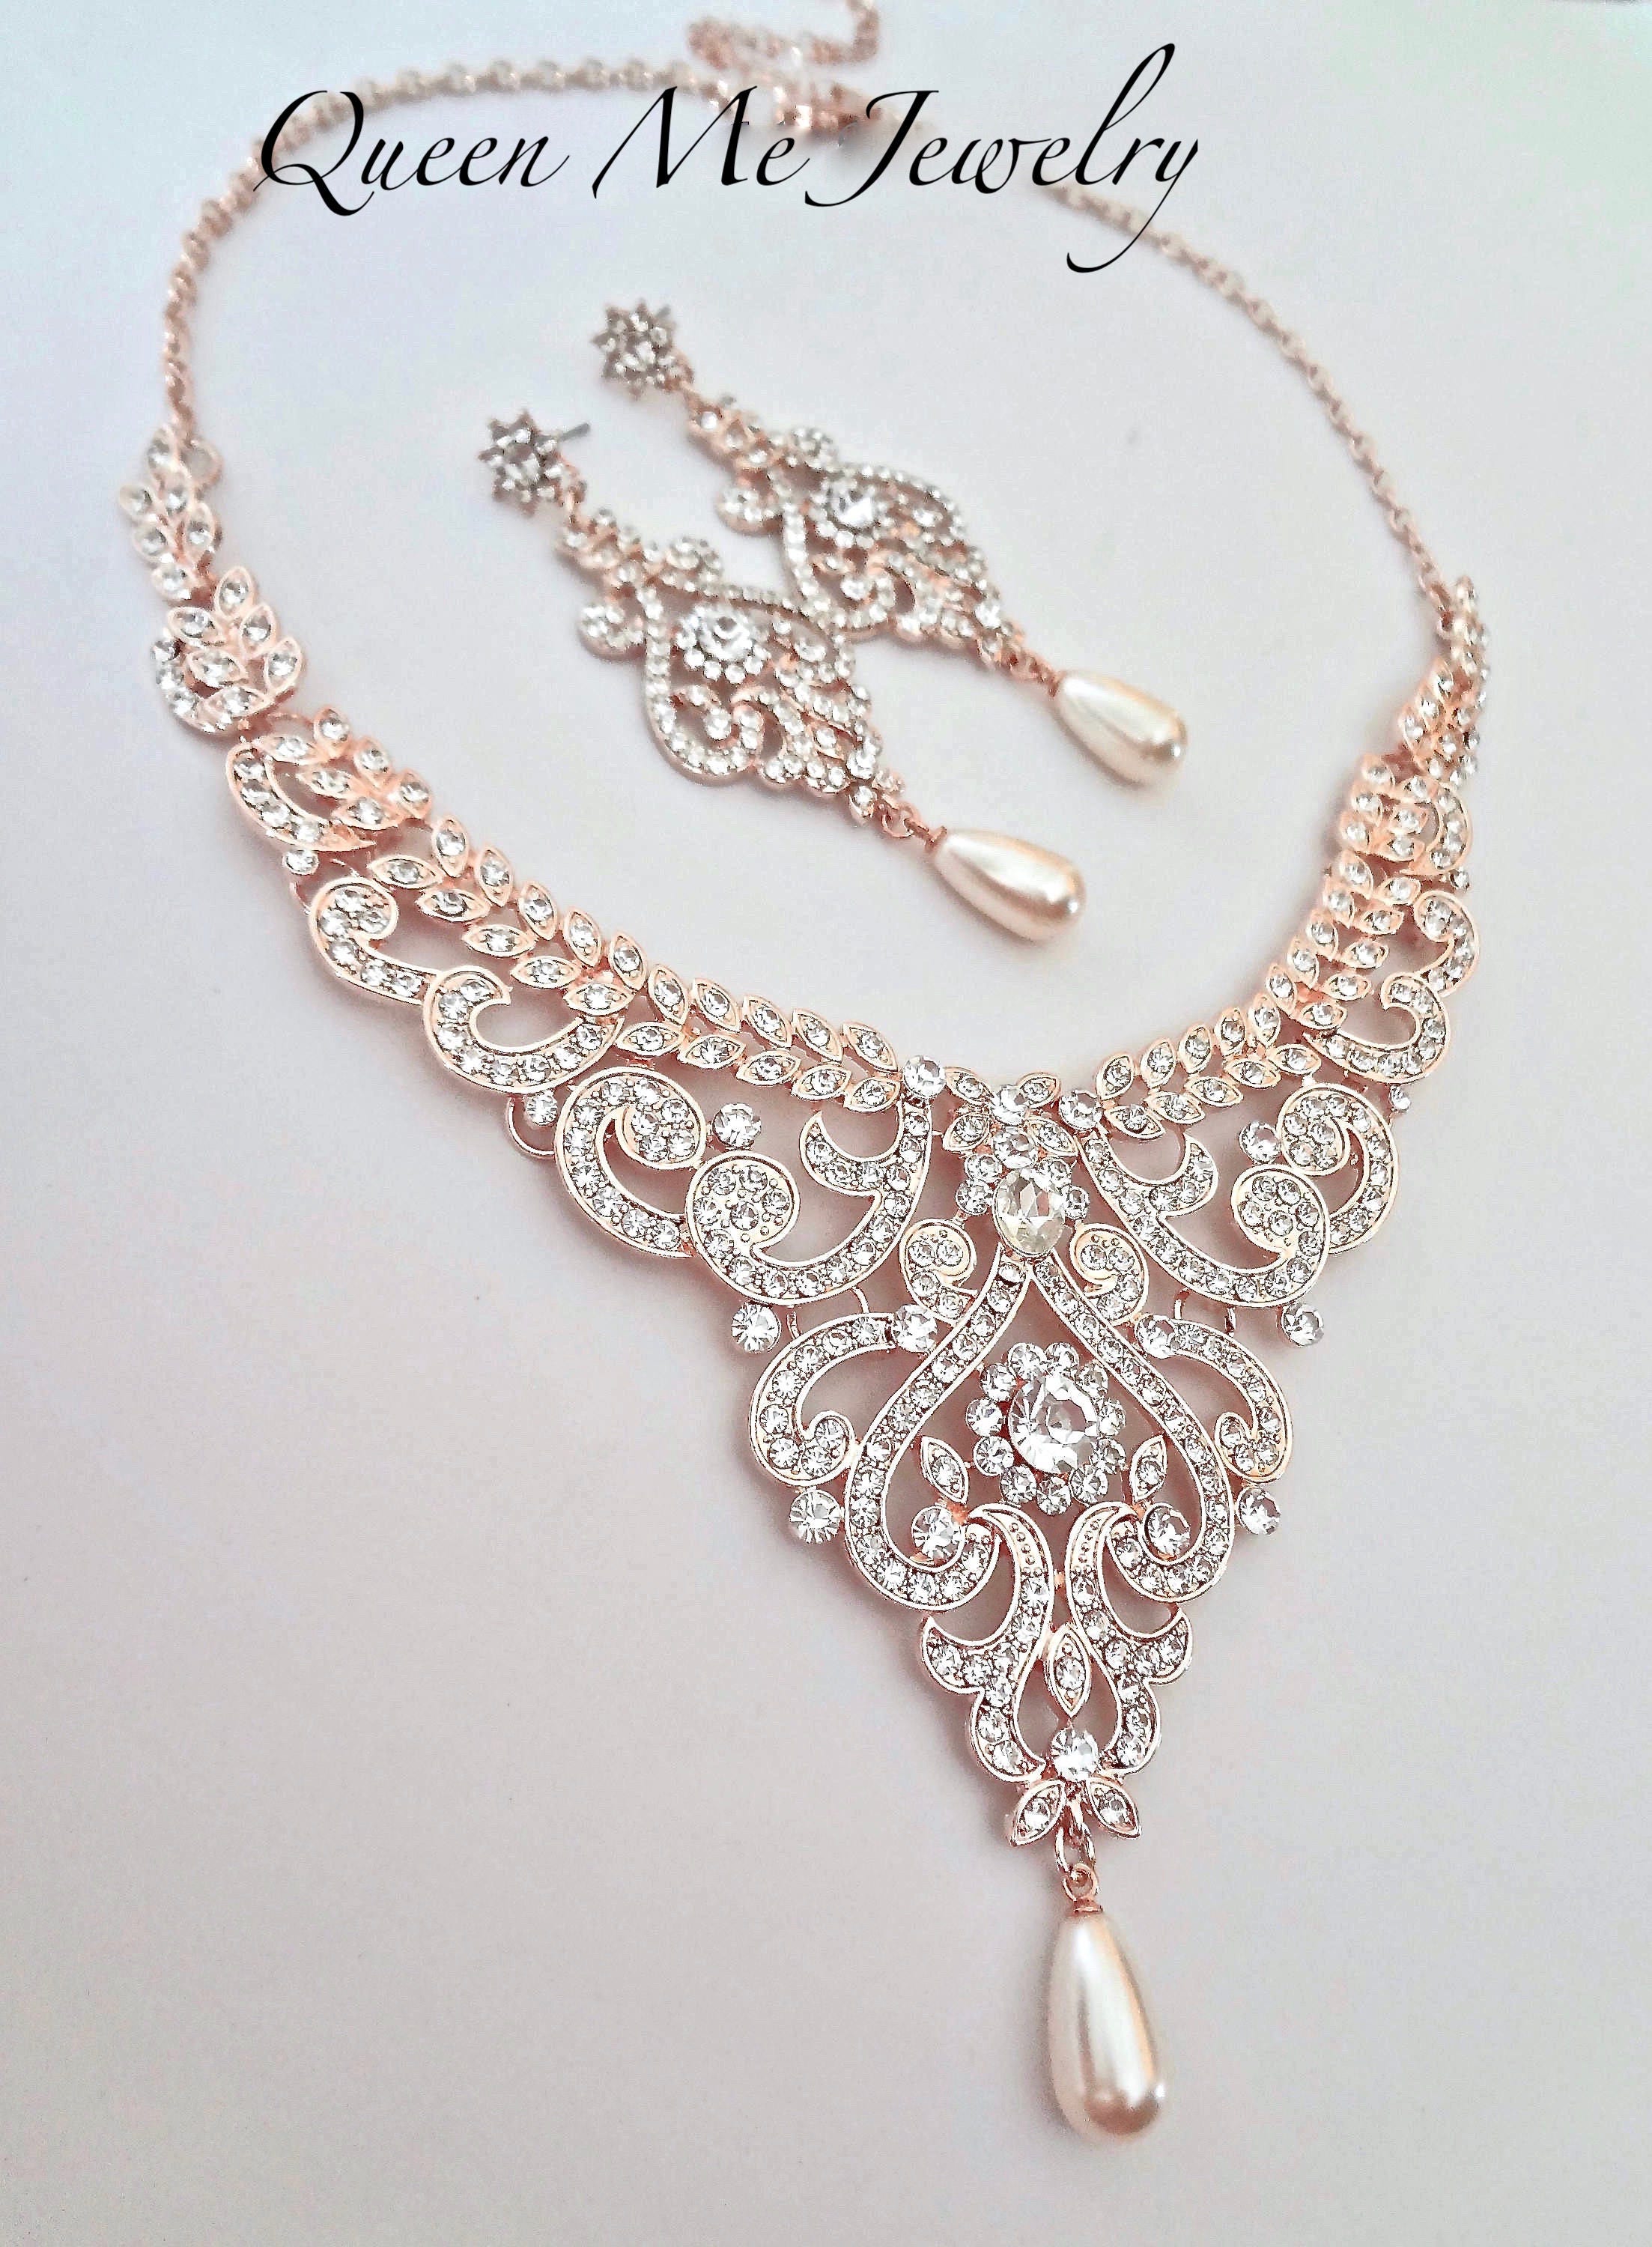 Rose Gold Statement Wedding Necklace For a Bride Crystal Bib | Etsy